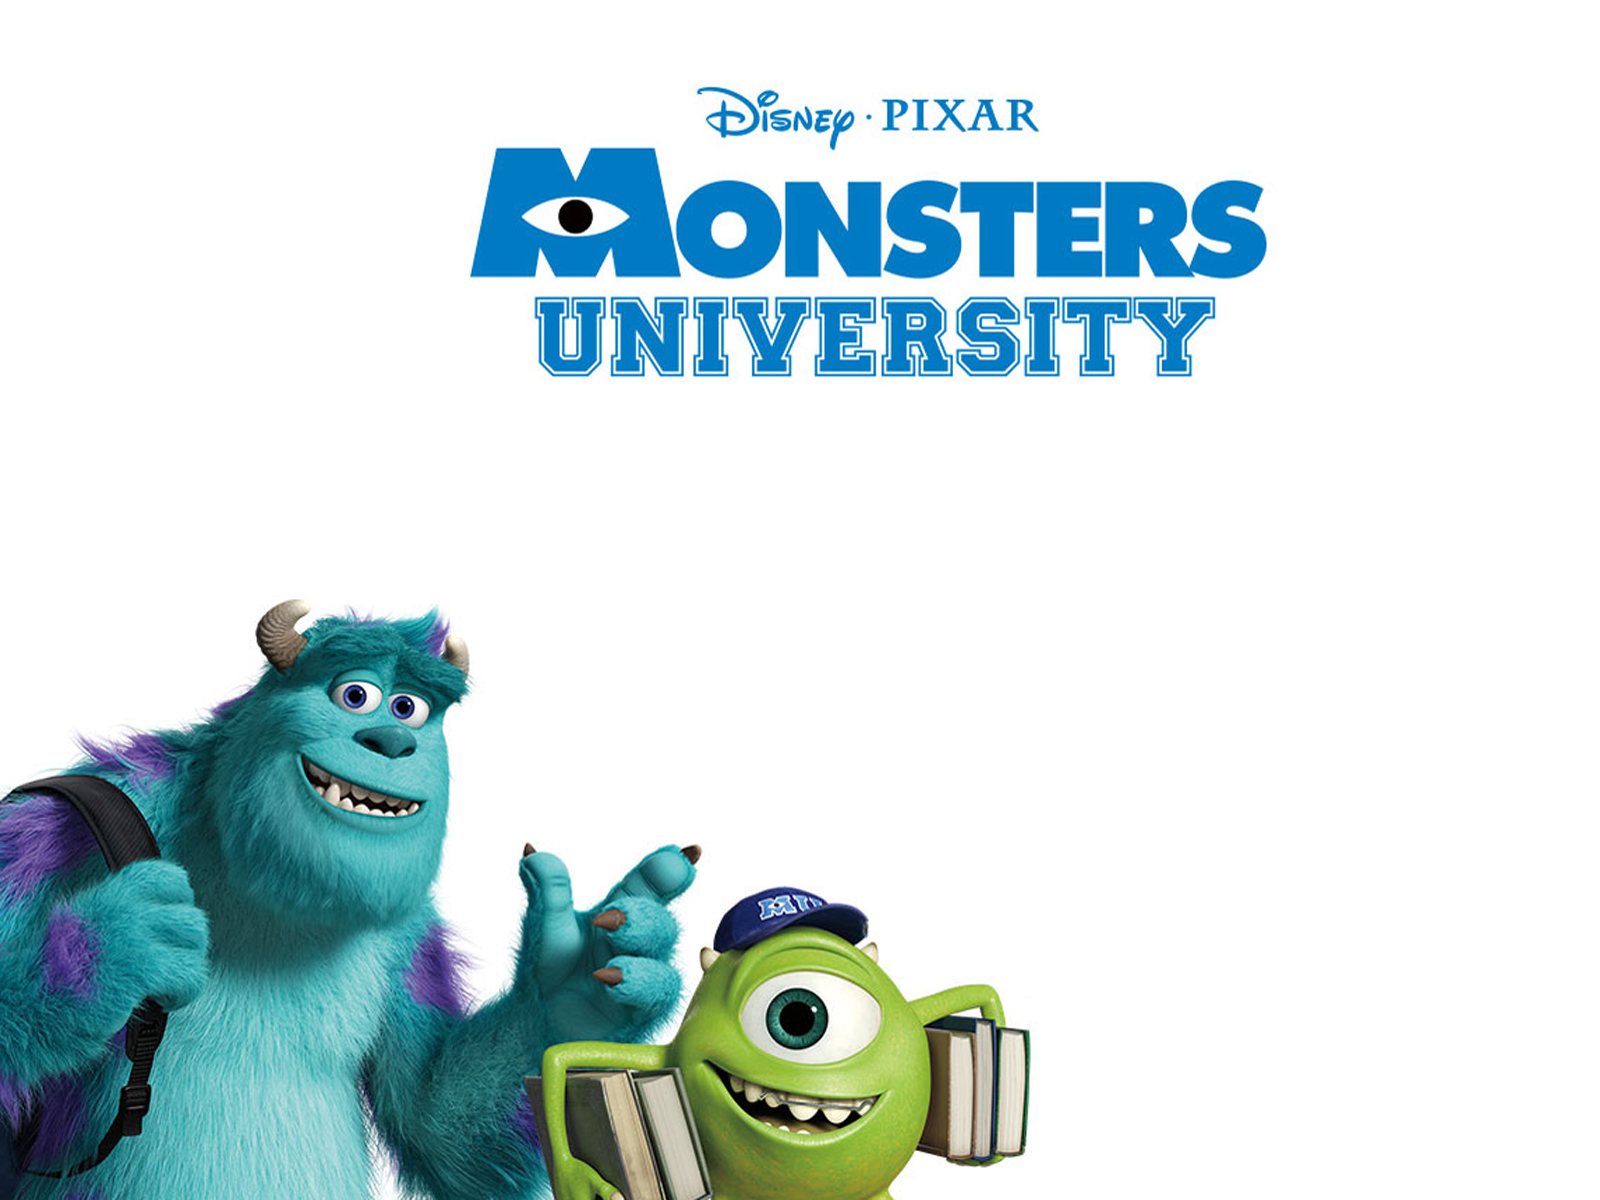 https://blogger.googleusercontent.com/img/b/R29vZ2xl/AVvXsEj-ensdeUabmvxD5L59FxlztI4vGtQBkuzrhoXhaVDwh6vChPhvorBDnAqyHkFDtbWia08N9lJRoPSqwkxKlGG7VuD0b2Ddi6361cJTTbhl12XxulcCOTmy3iVGh0m_JoifeAl_2O0Uk20/s1600/Pixar-Monsters-University-HD-Wallpaper_Vvallpaper.Net.jpg